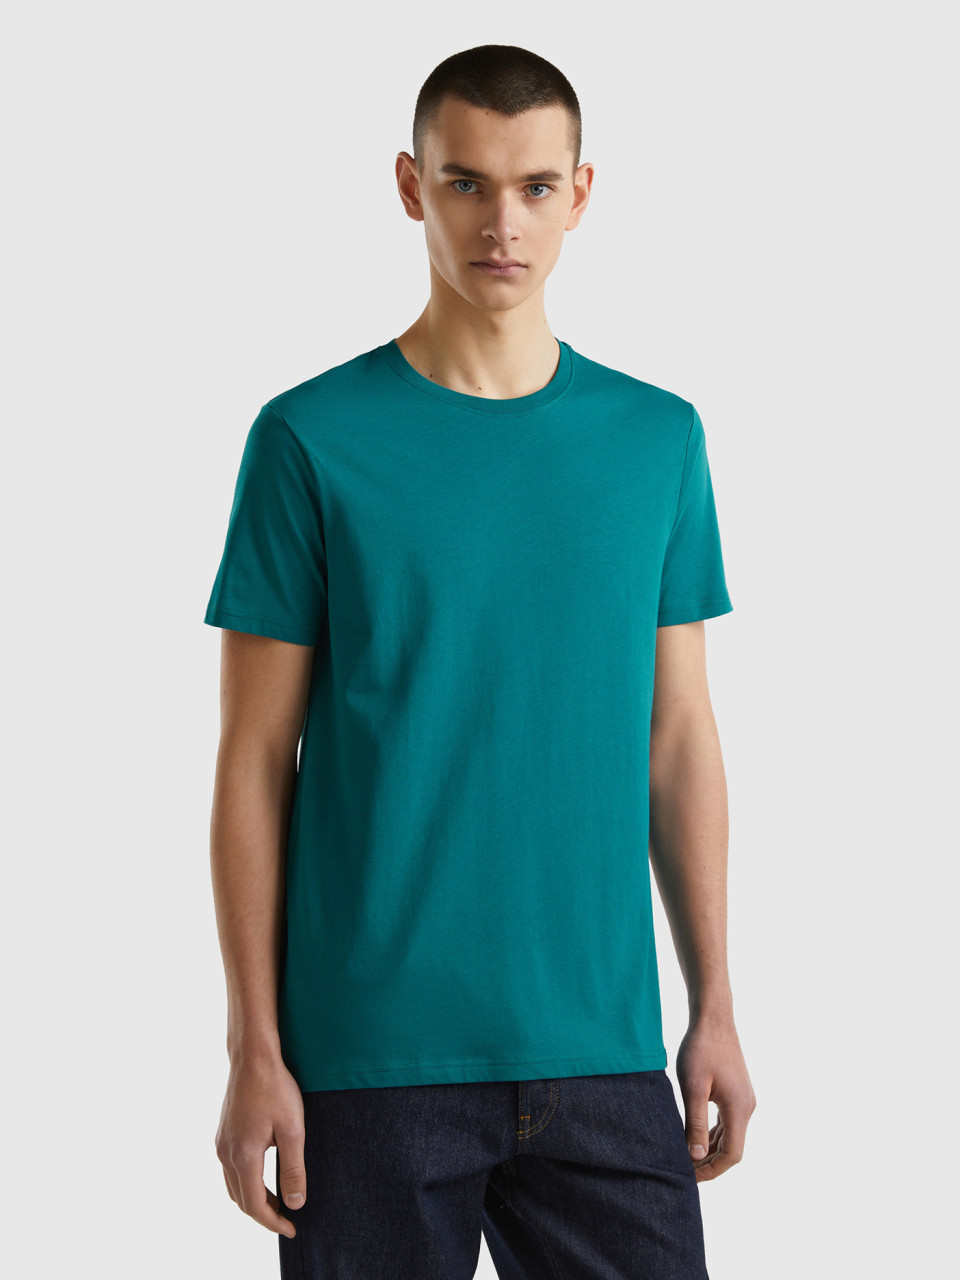 Benetton, T-shirt Verde Ottanio, Verde Ottanio, Uomo